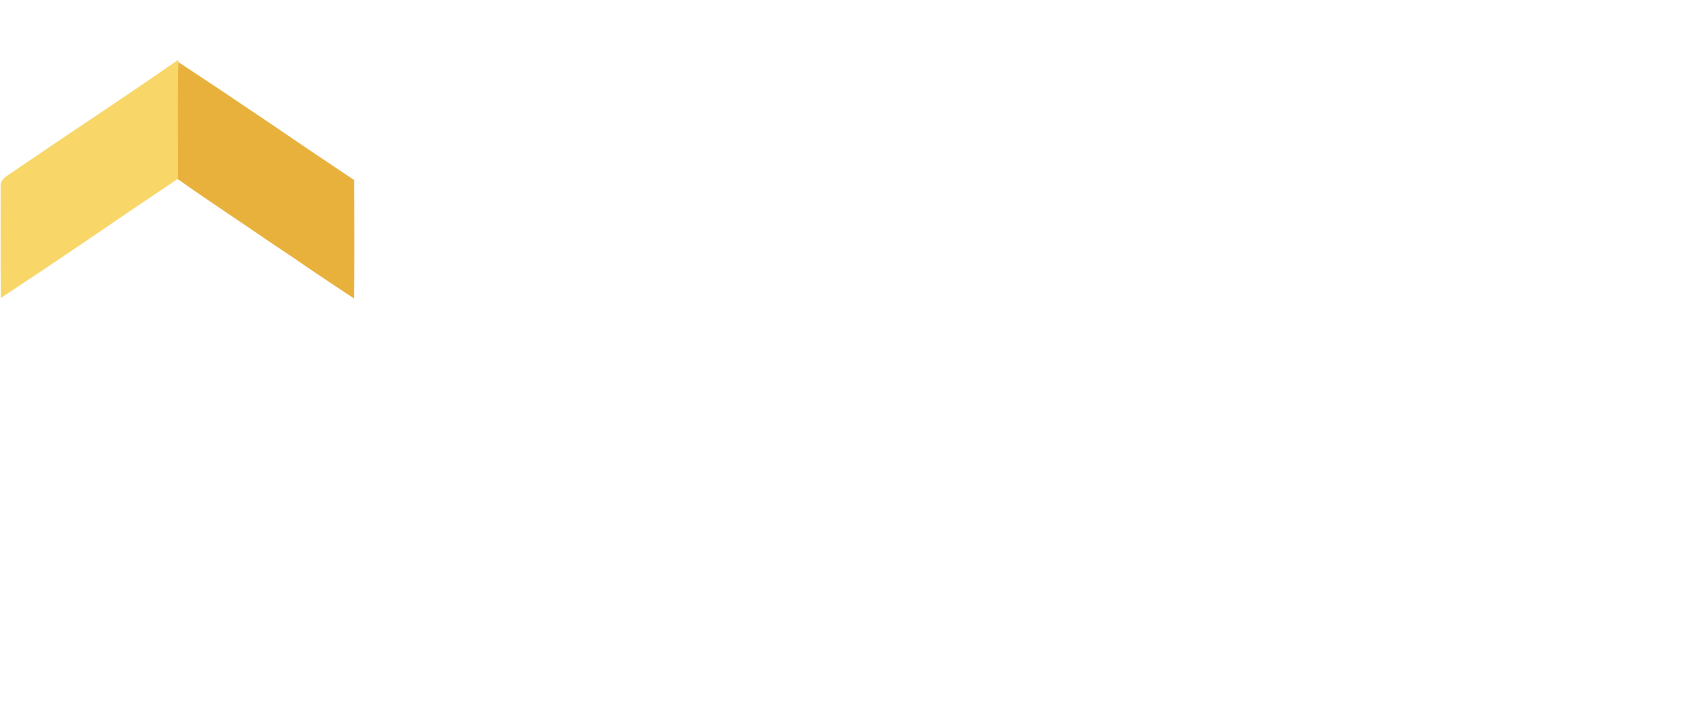 Porch Group Logo groß für dunkle Hintergründe (transparentes PNG)